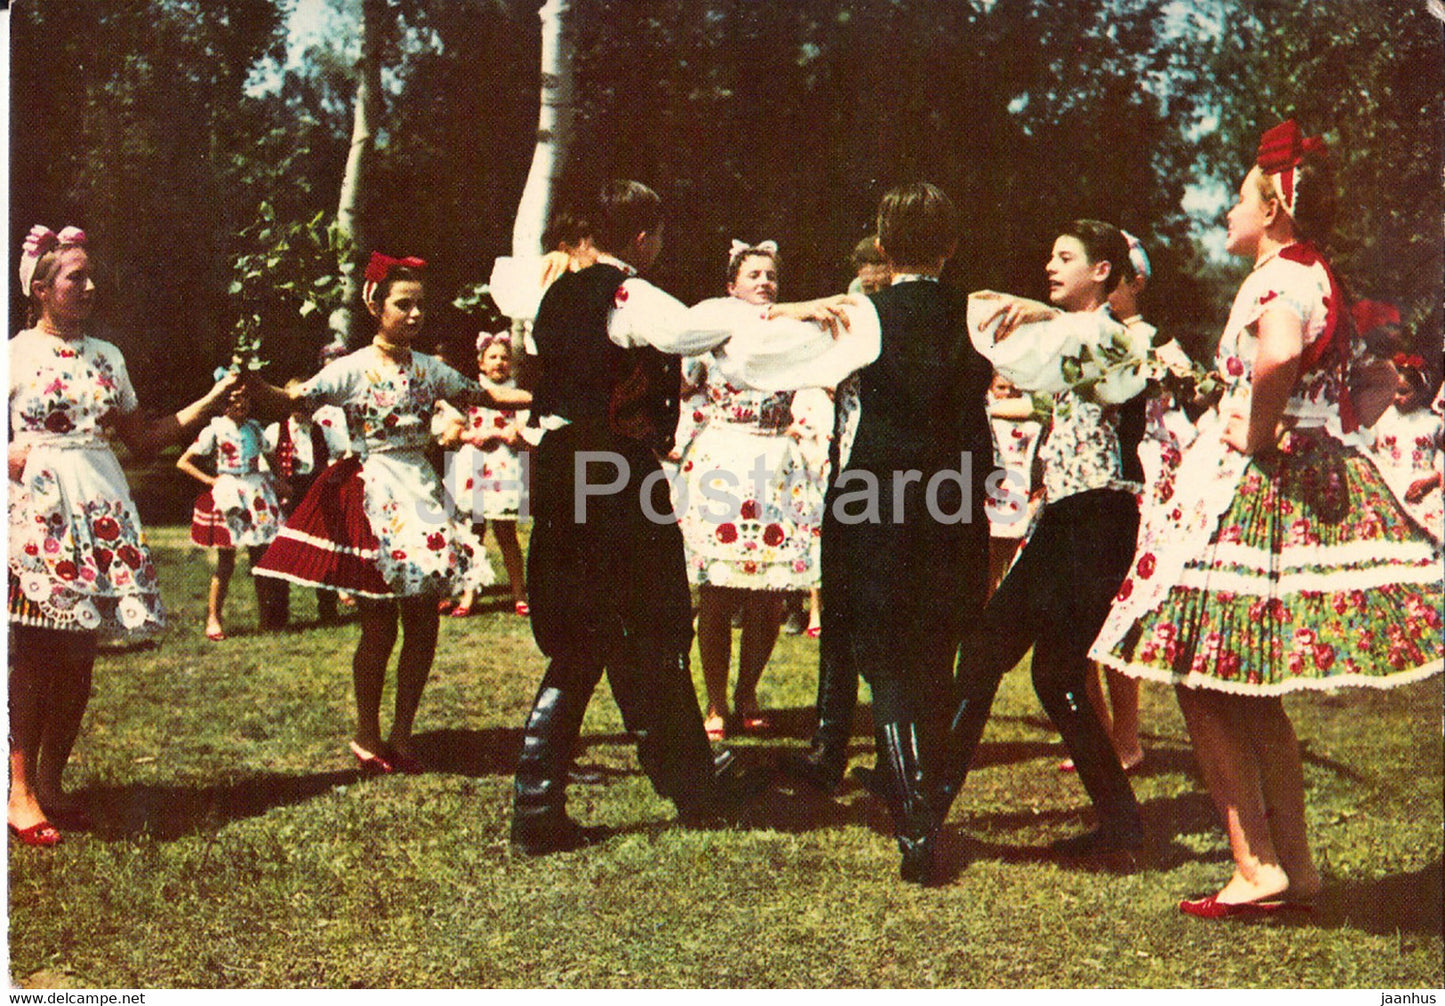 Traditional Costume of Kalocsa - Hungarian Folk Costumes - dancing - Hungary - used - JH Postcards